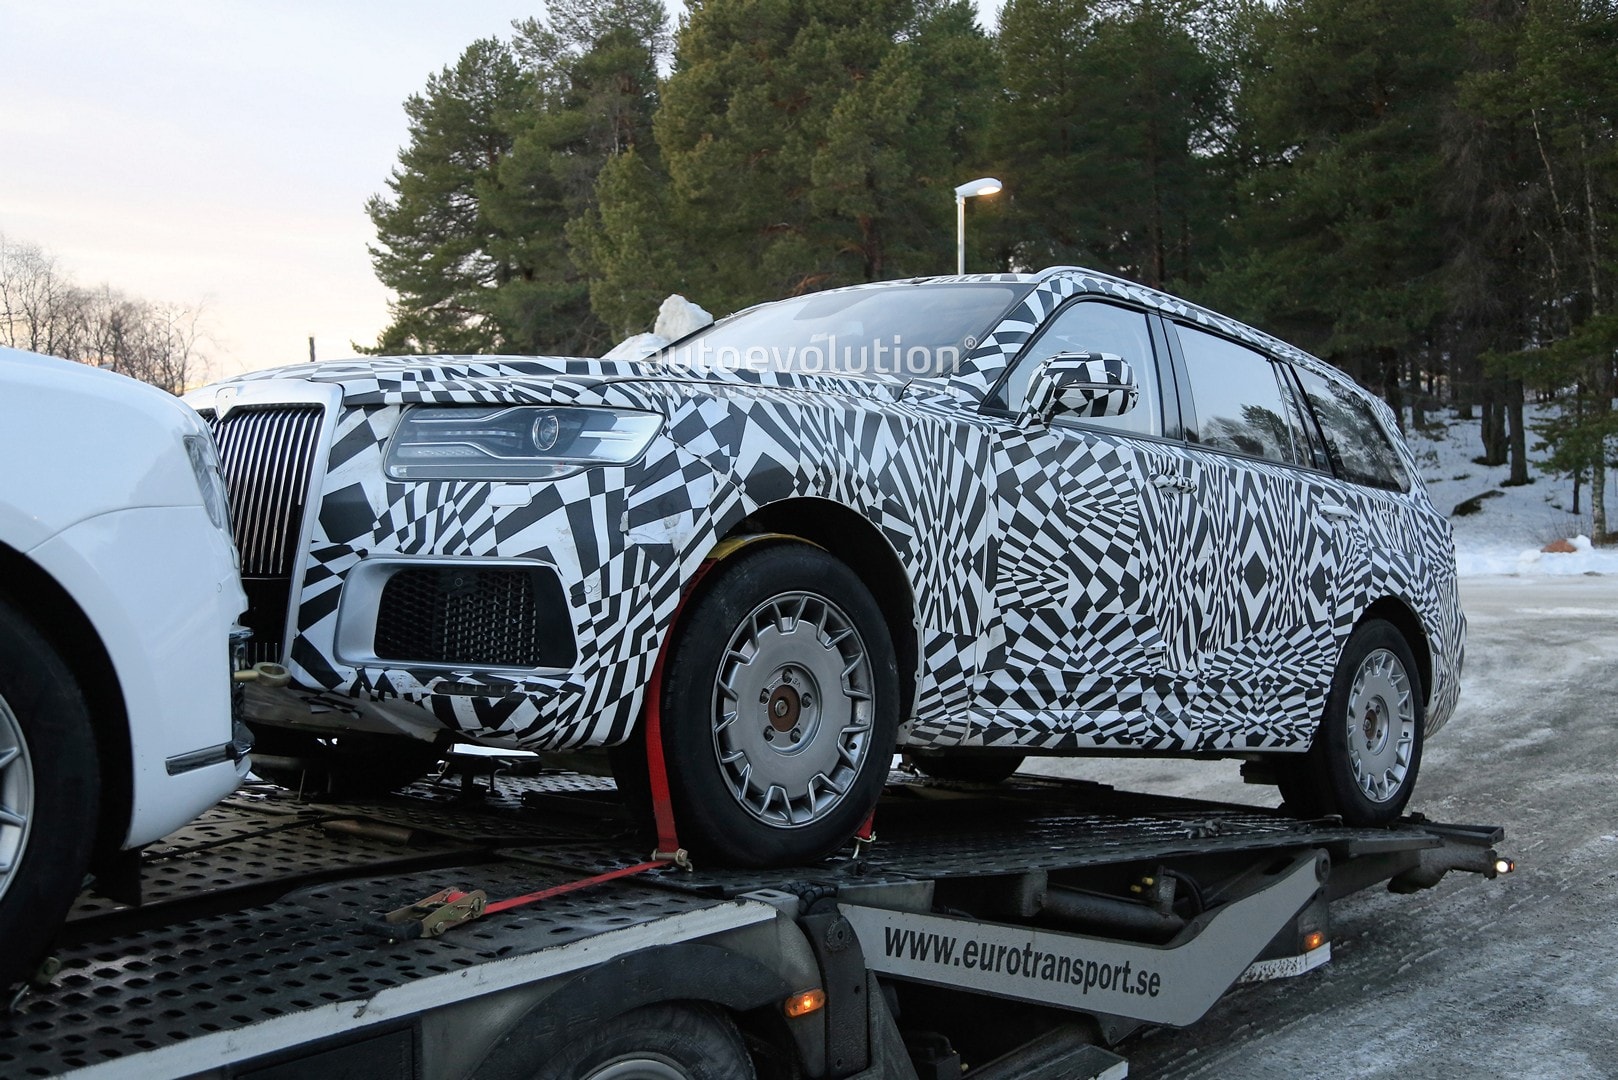 The Aurus experiment: Russia's Rolls-Royce makes Geneva debut